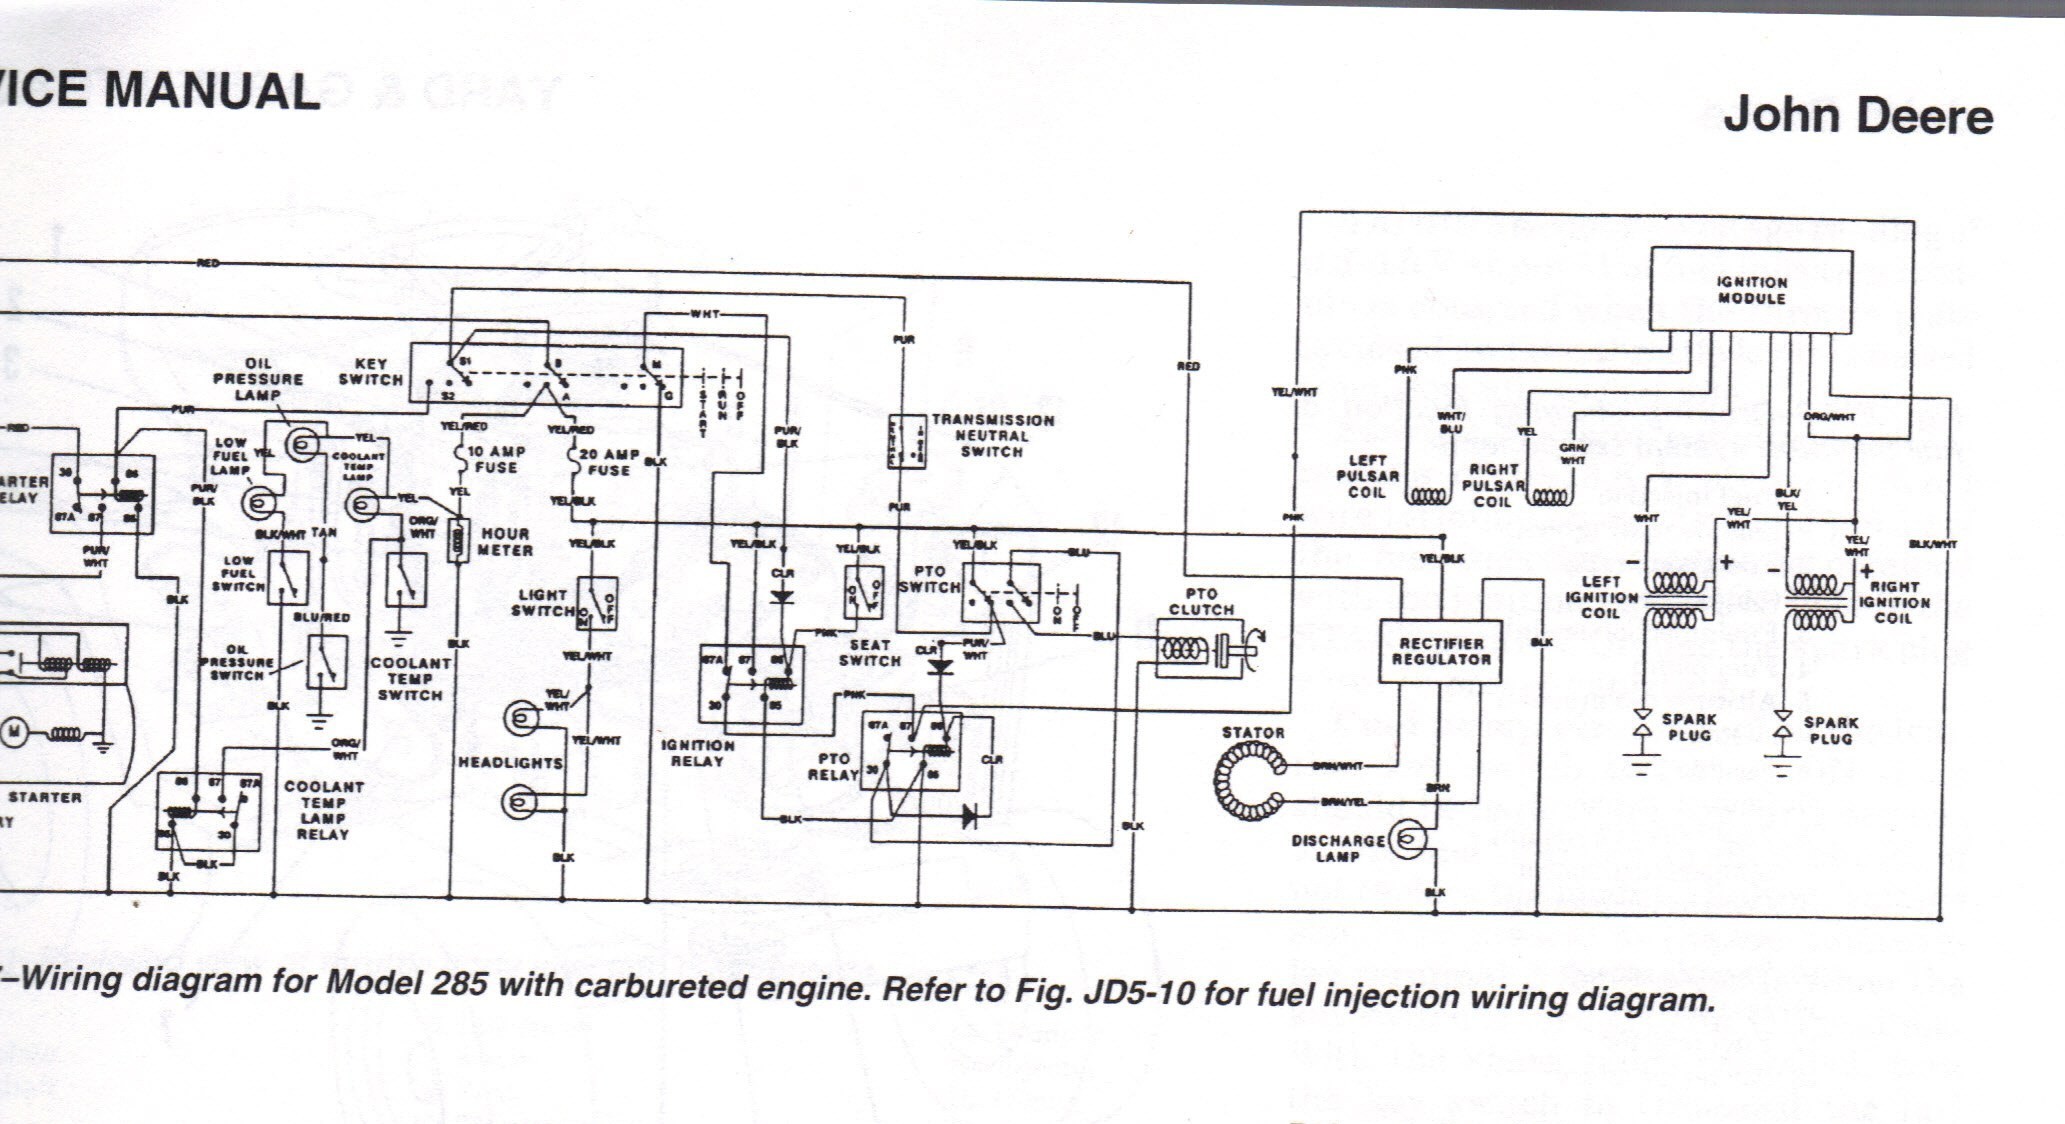 John Deere L120 Clutch Wiring Diagram 318 John Deere Wiring John Deere Gator 4